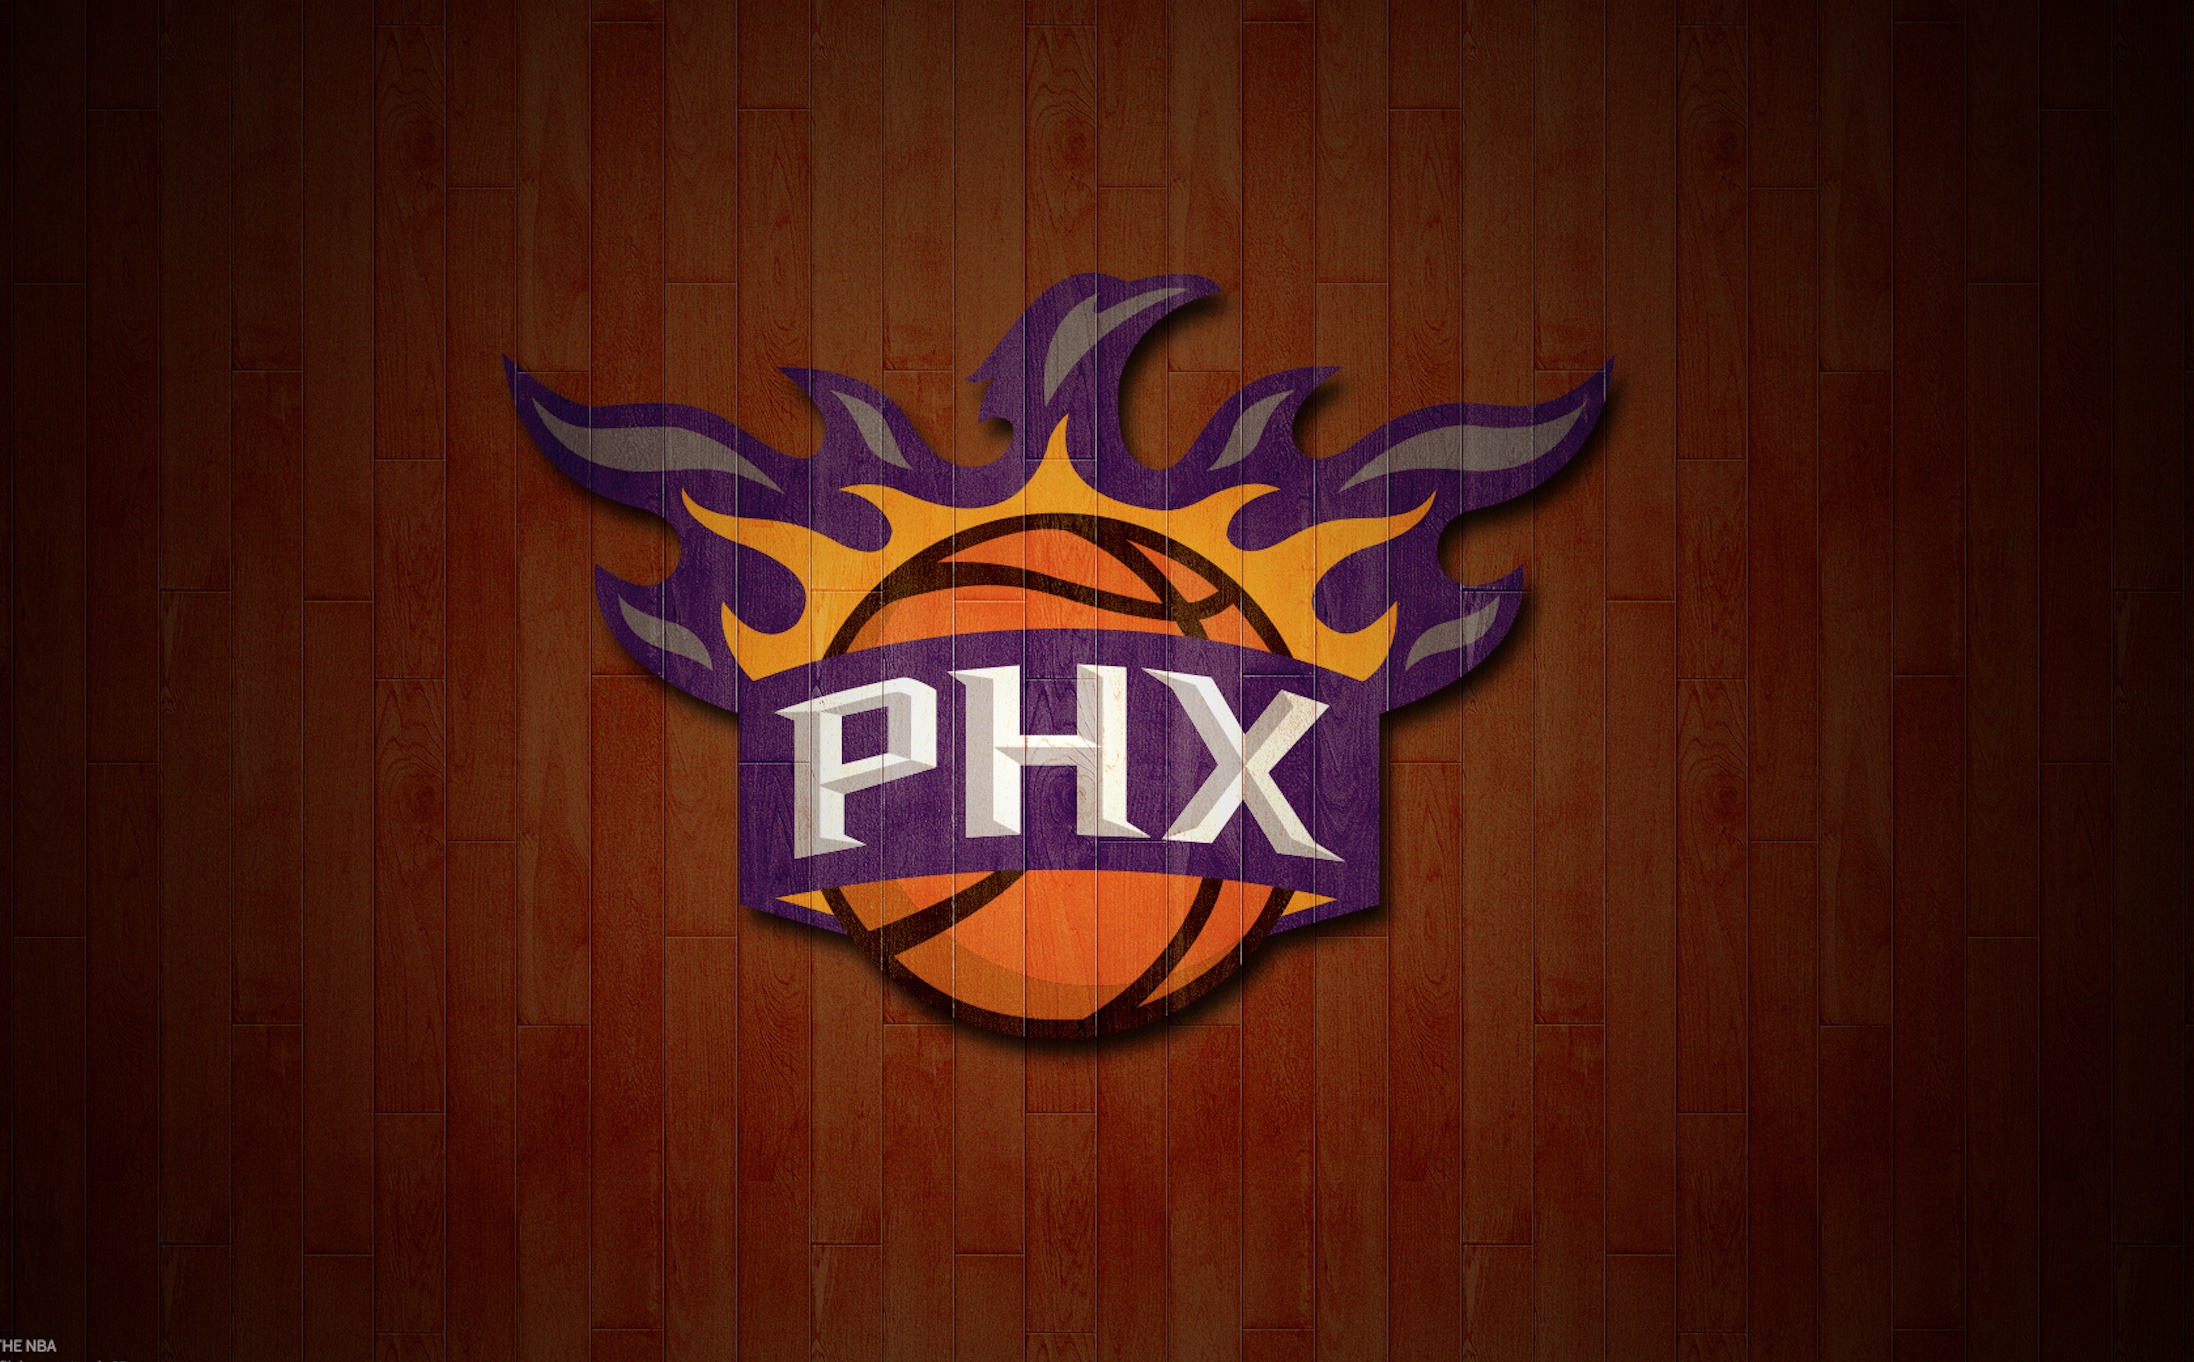 Phoenix Suns logo; image by Michael Tipton, via Flickr, CC BY-SA 2.0.